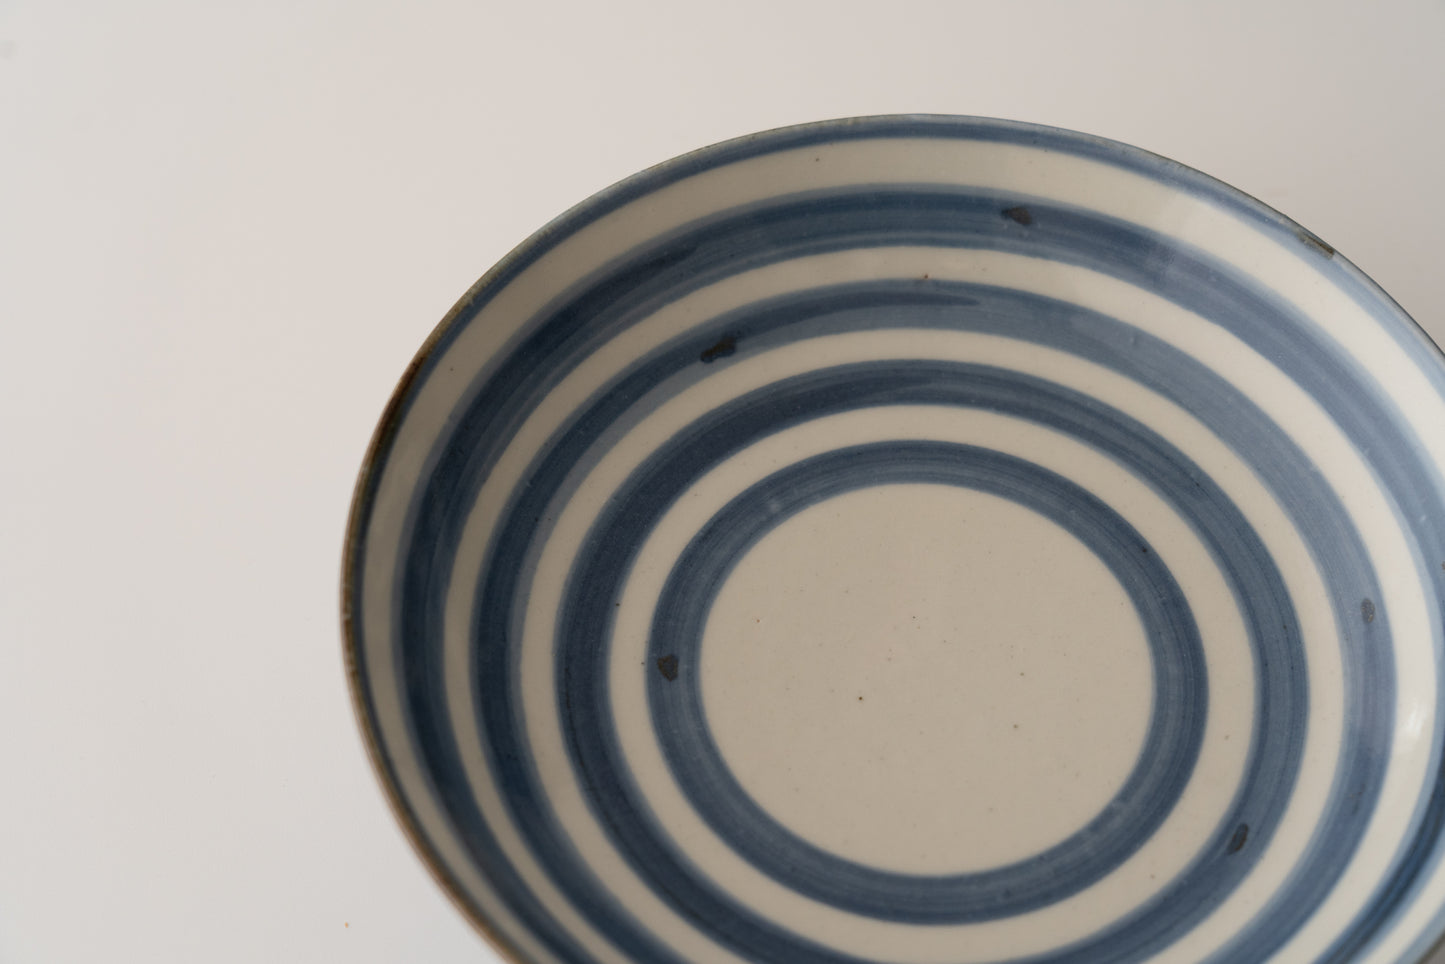 Flat bowl with stripe design, Old imari ware